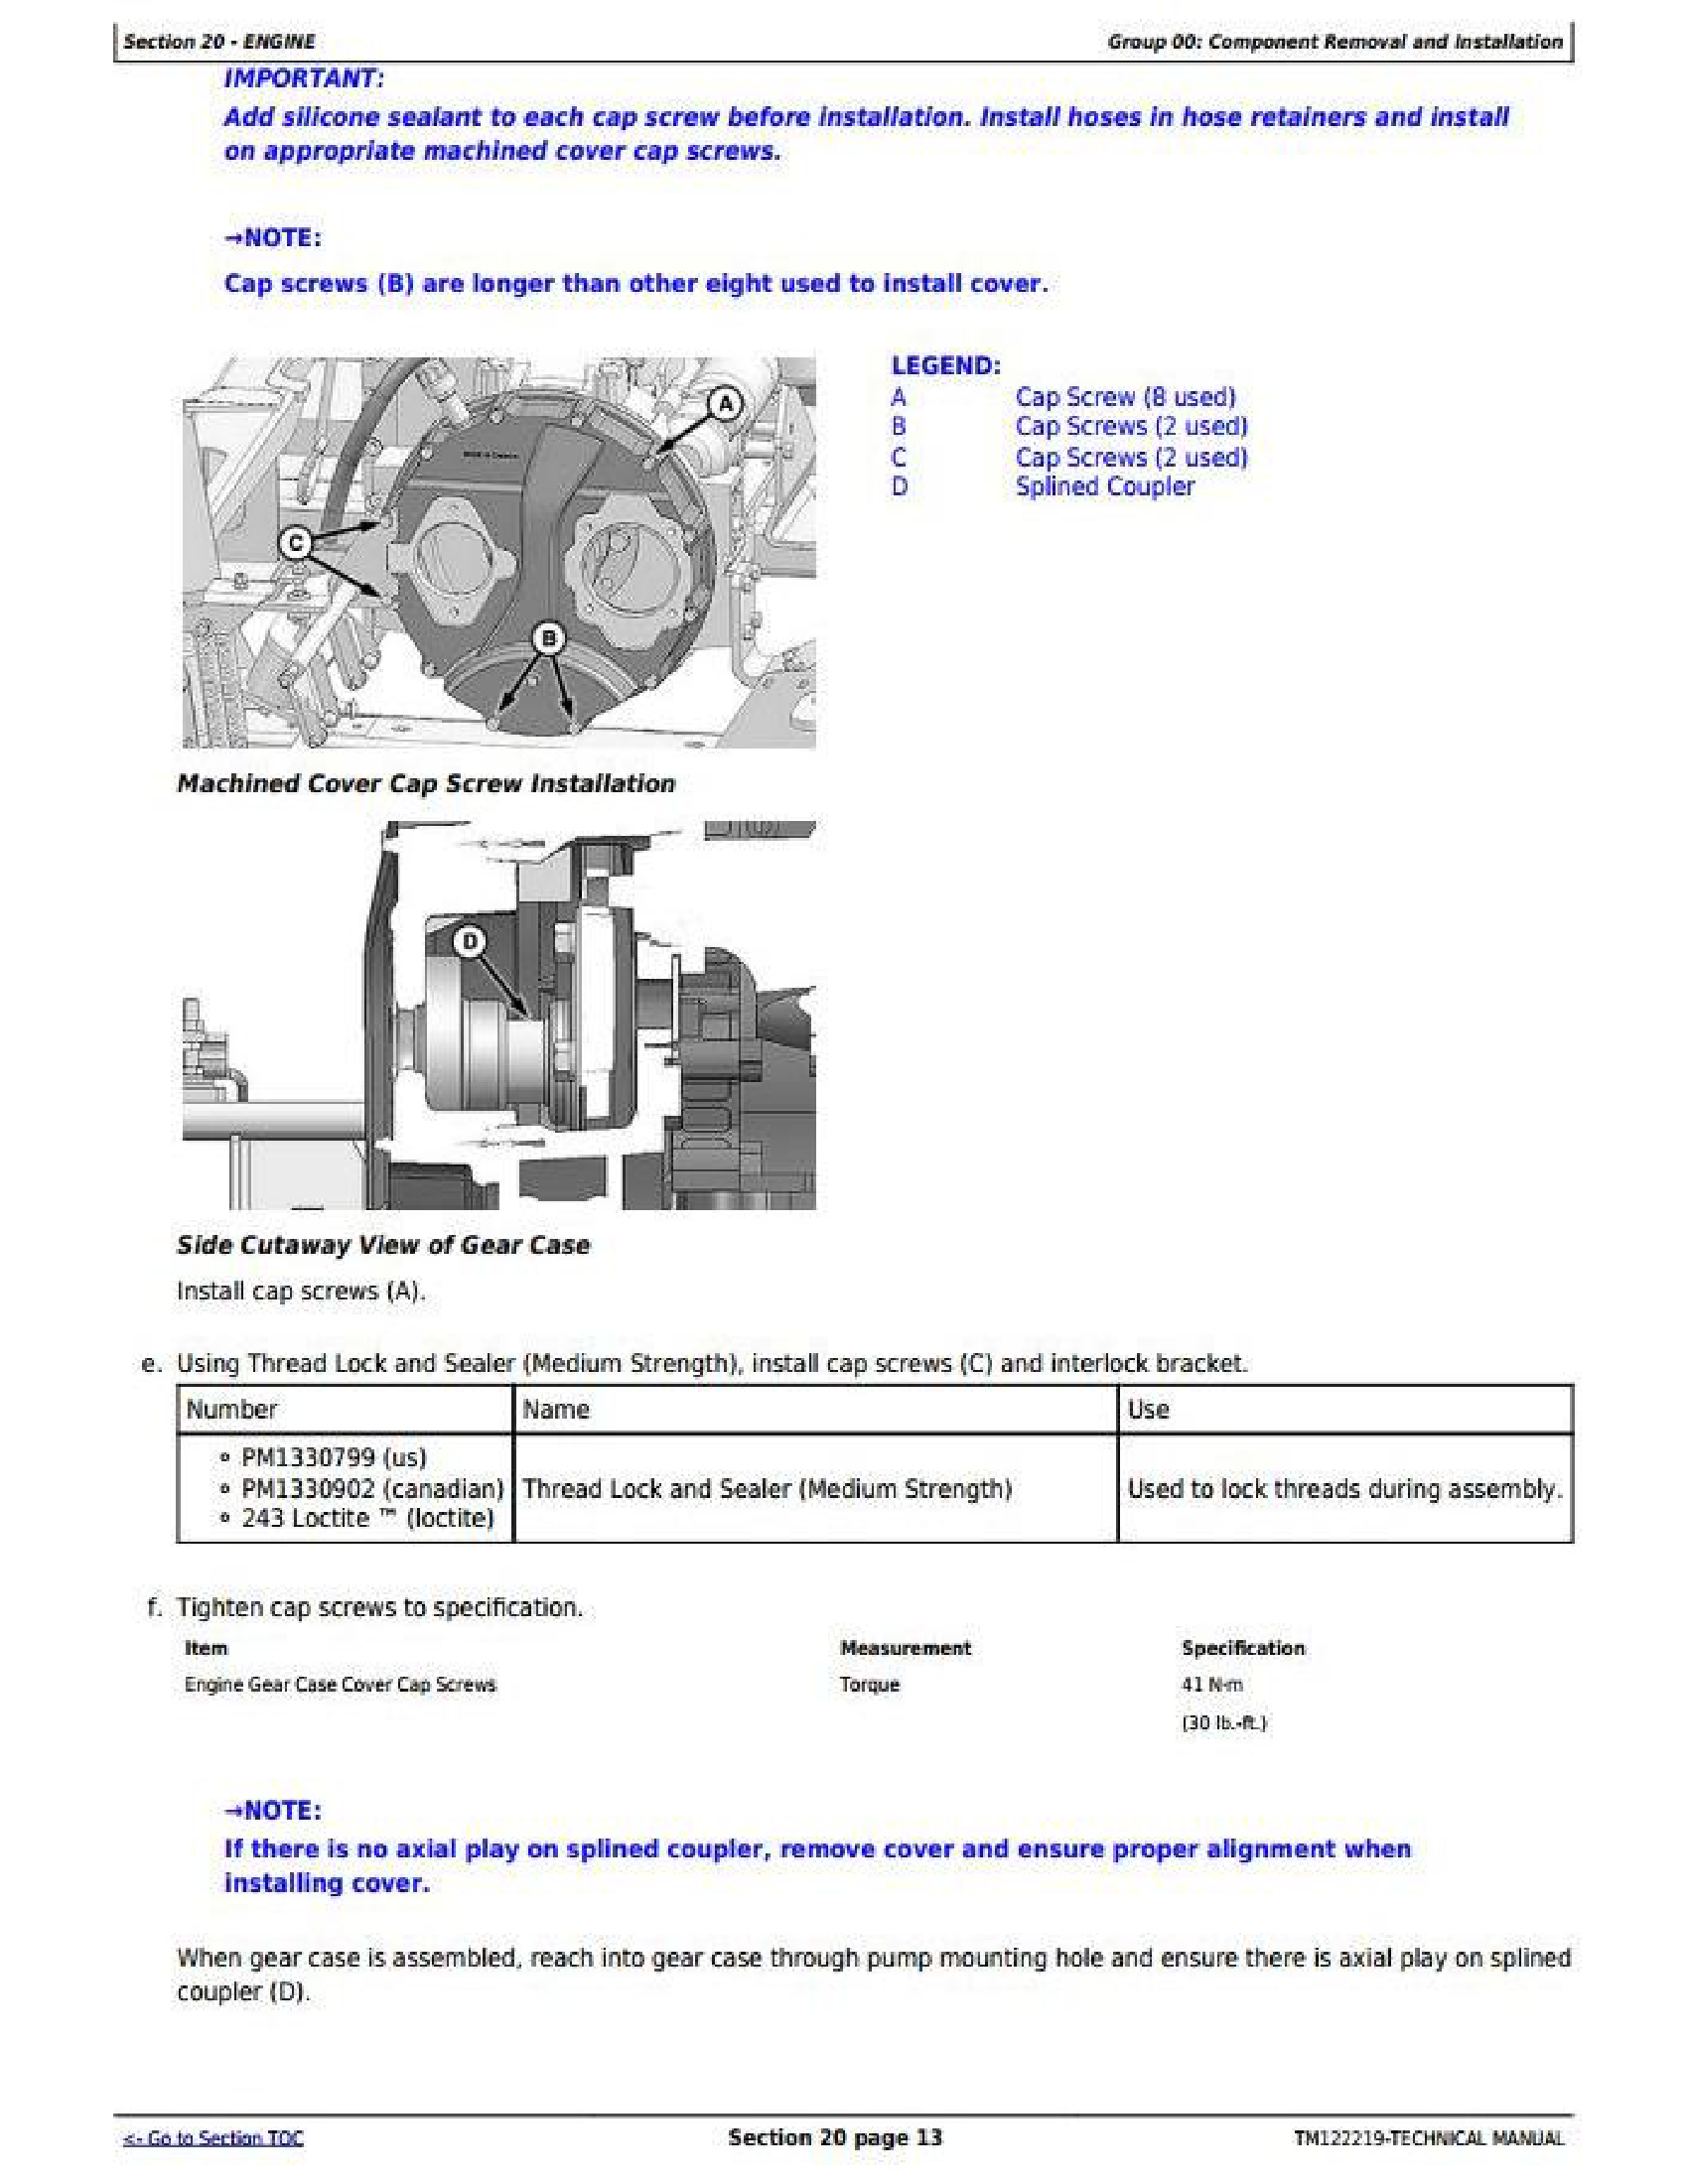 John Deere W150 manual pdf